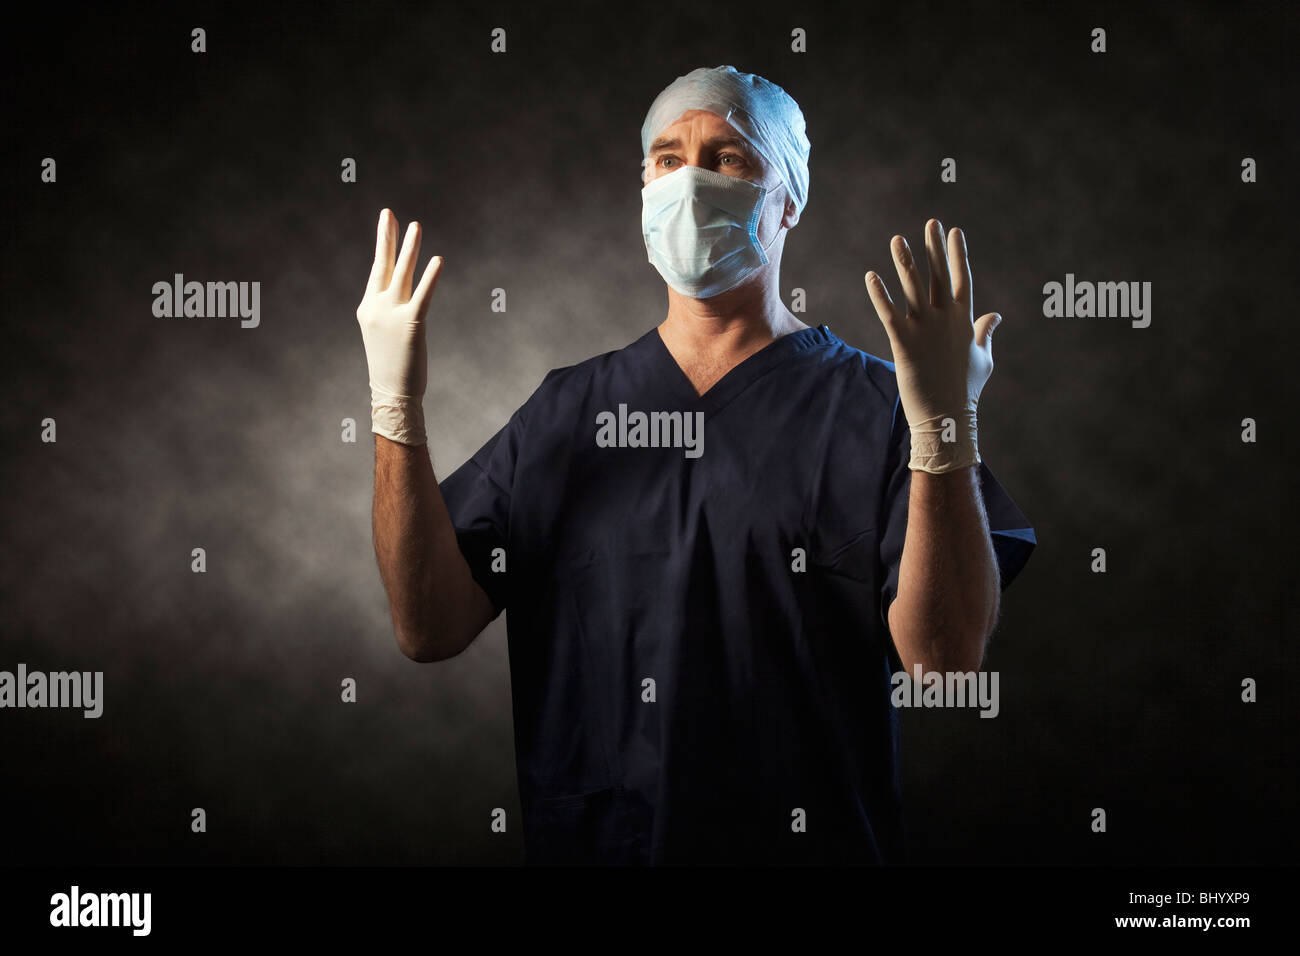 Male surgeon in scrubs Stock Photo